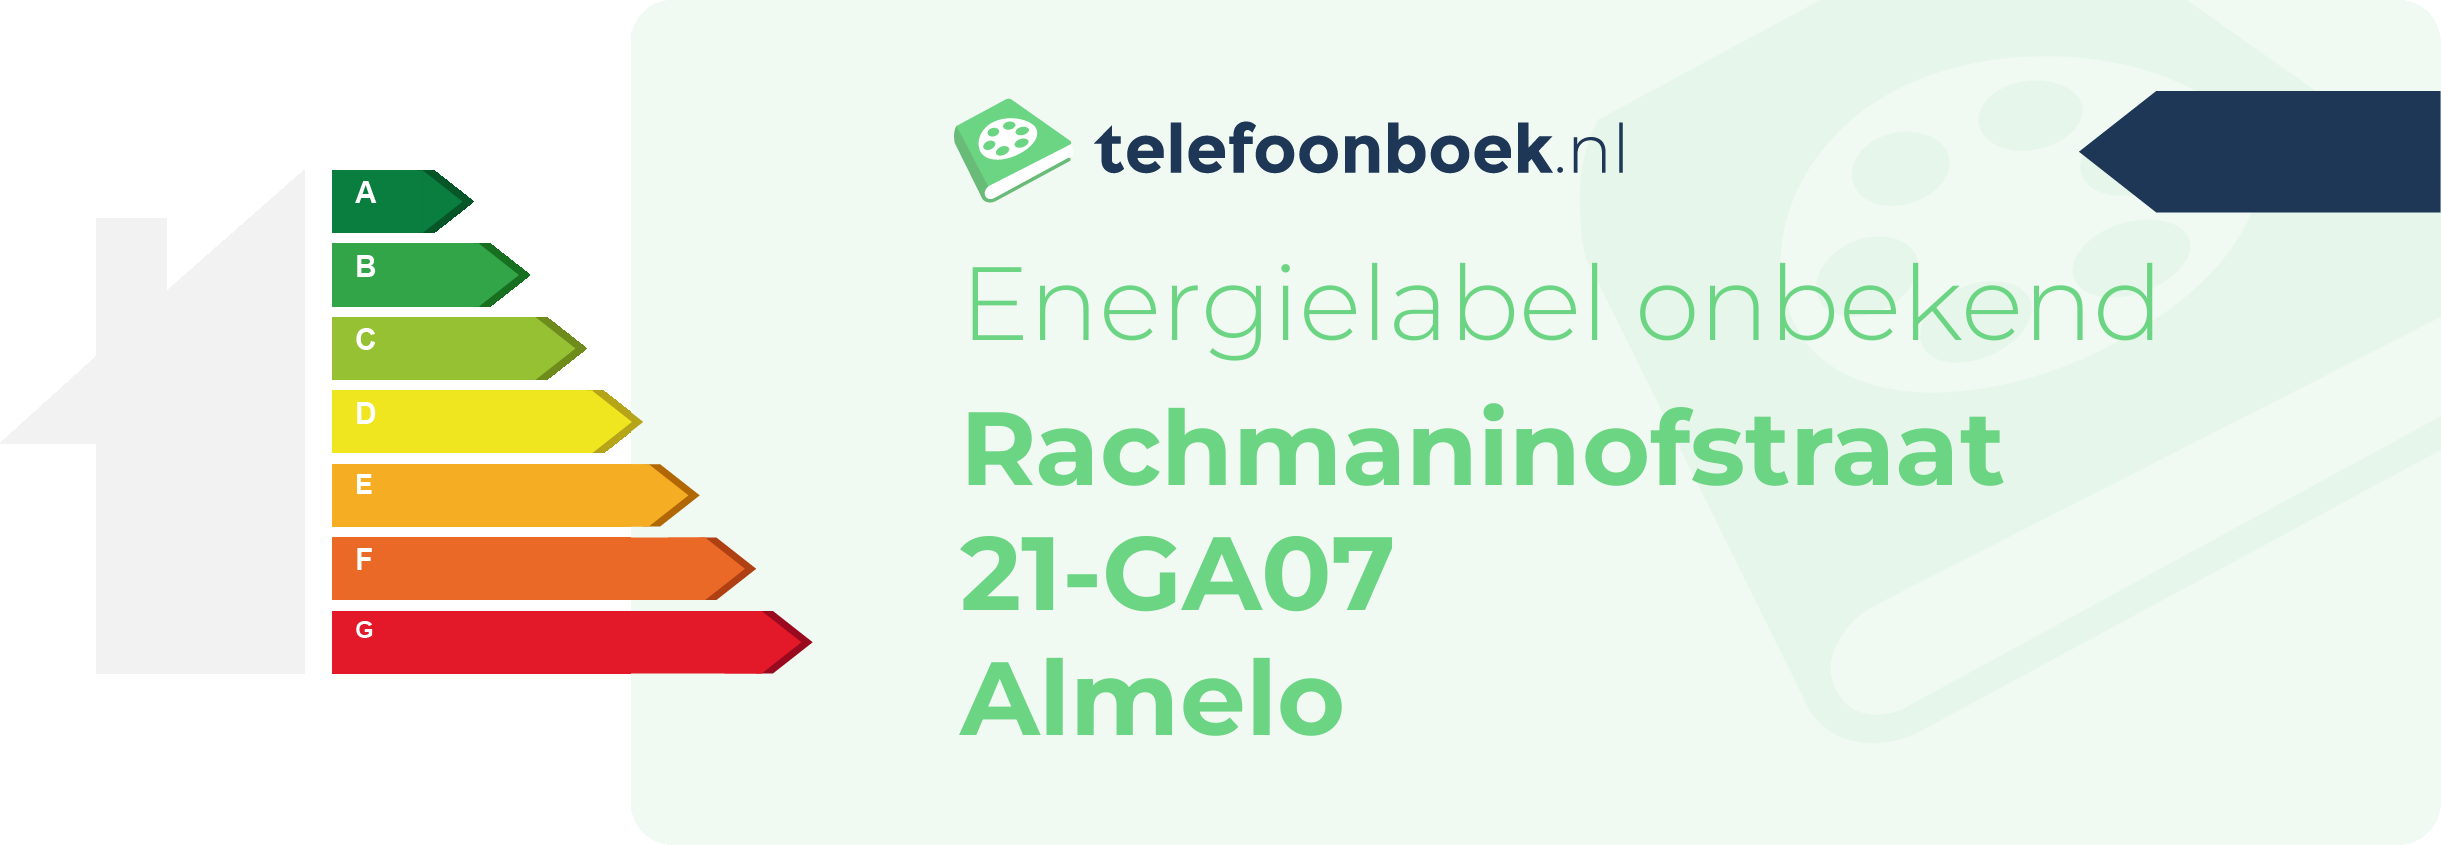 Energielabel Rachmaninofstraat 21-GA07 Almelo